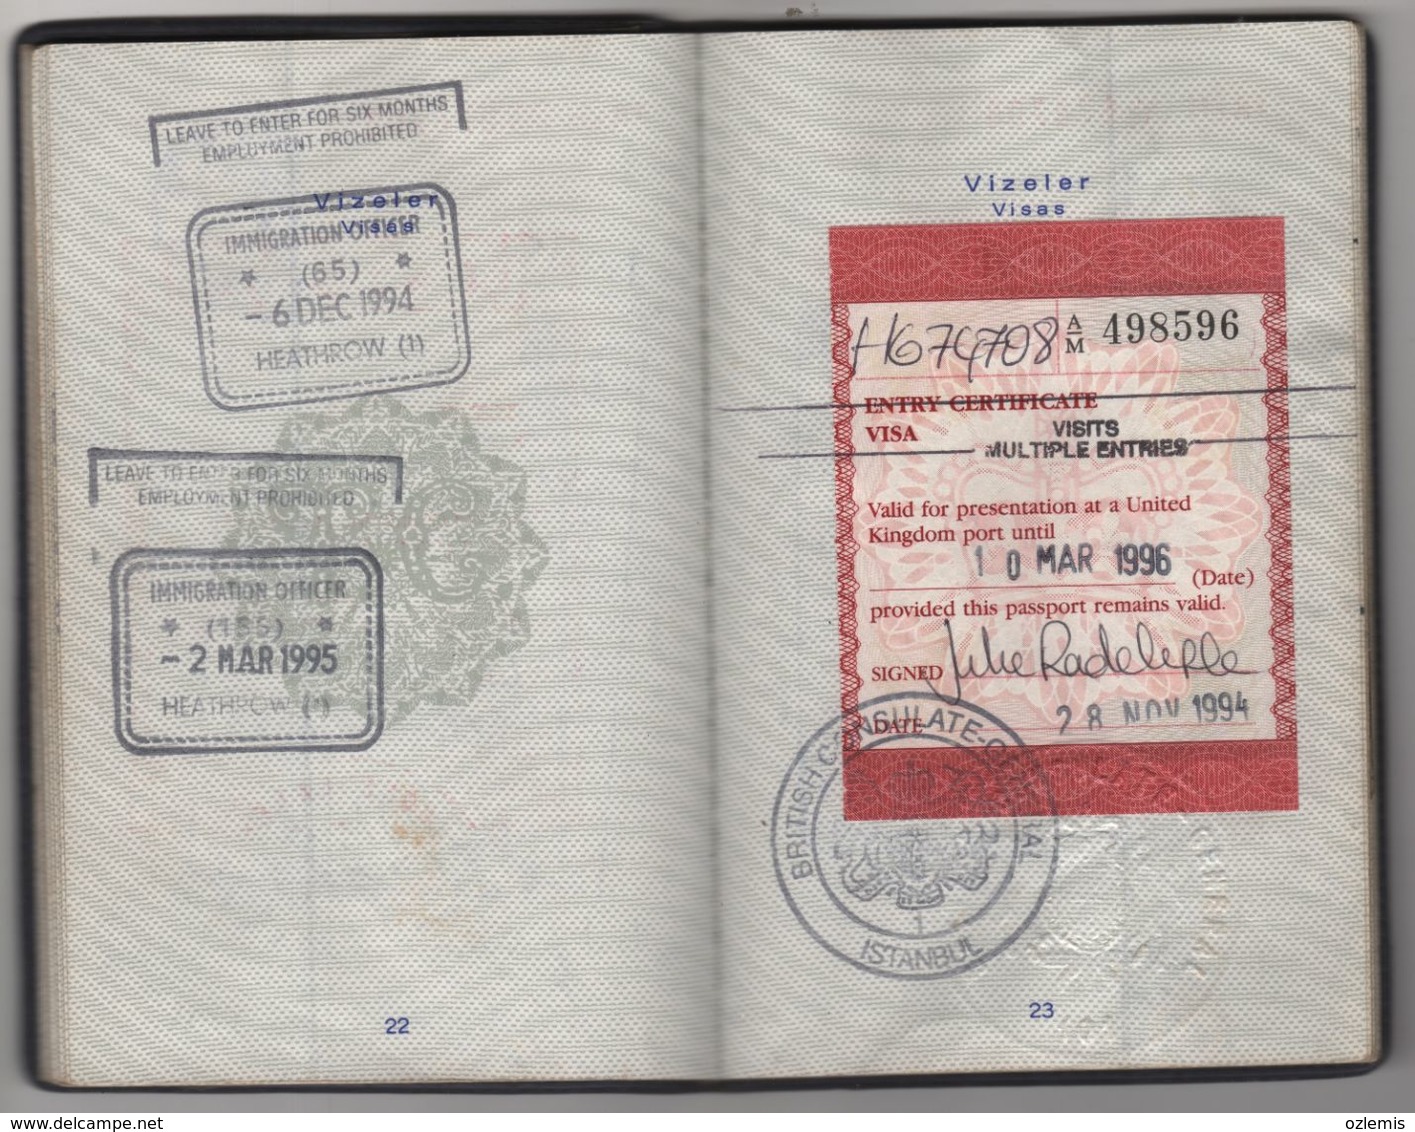 1989 PASSPORT, PASSEPORT ,ITALIA , ENGLAND,FINLAND,USA,GERMANY,SUOSSE,EGYPT,SAUDI ARABIA VİSA AND FISCALS